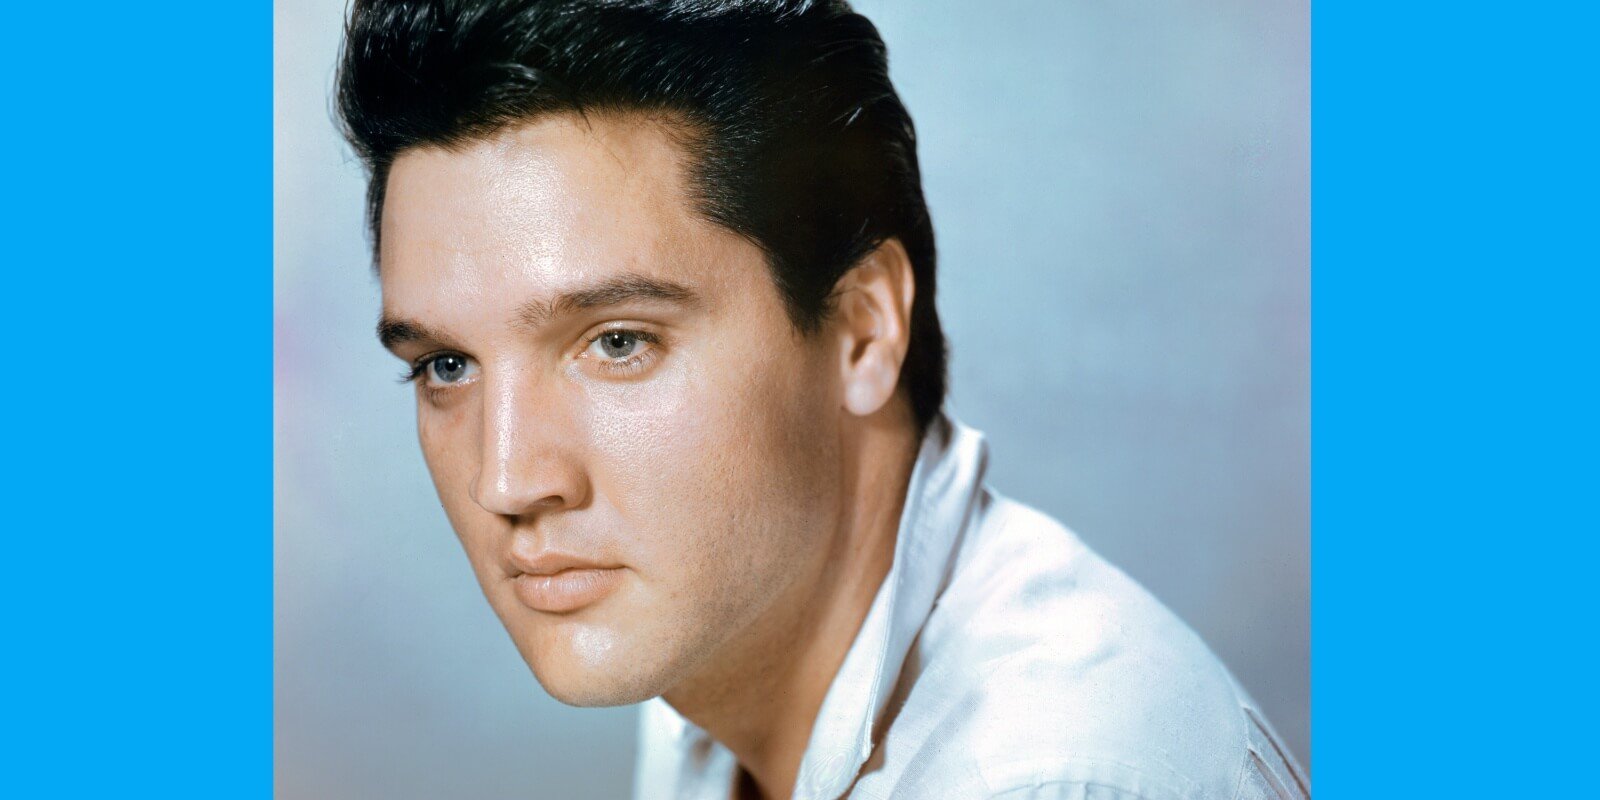 Who Was Elvis Presley Named After?